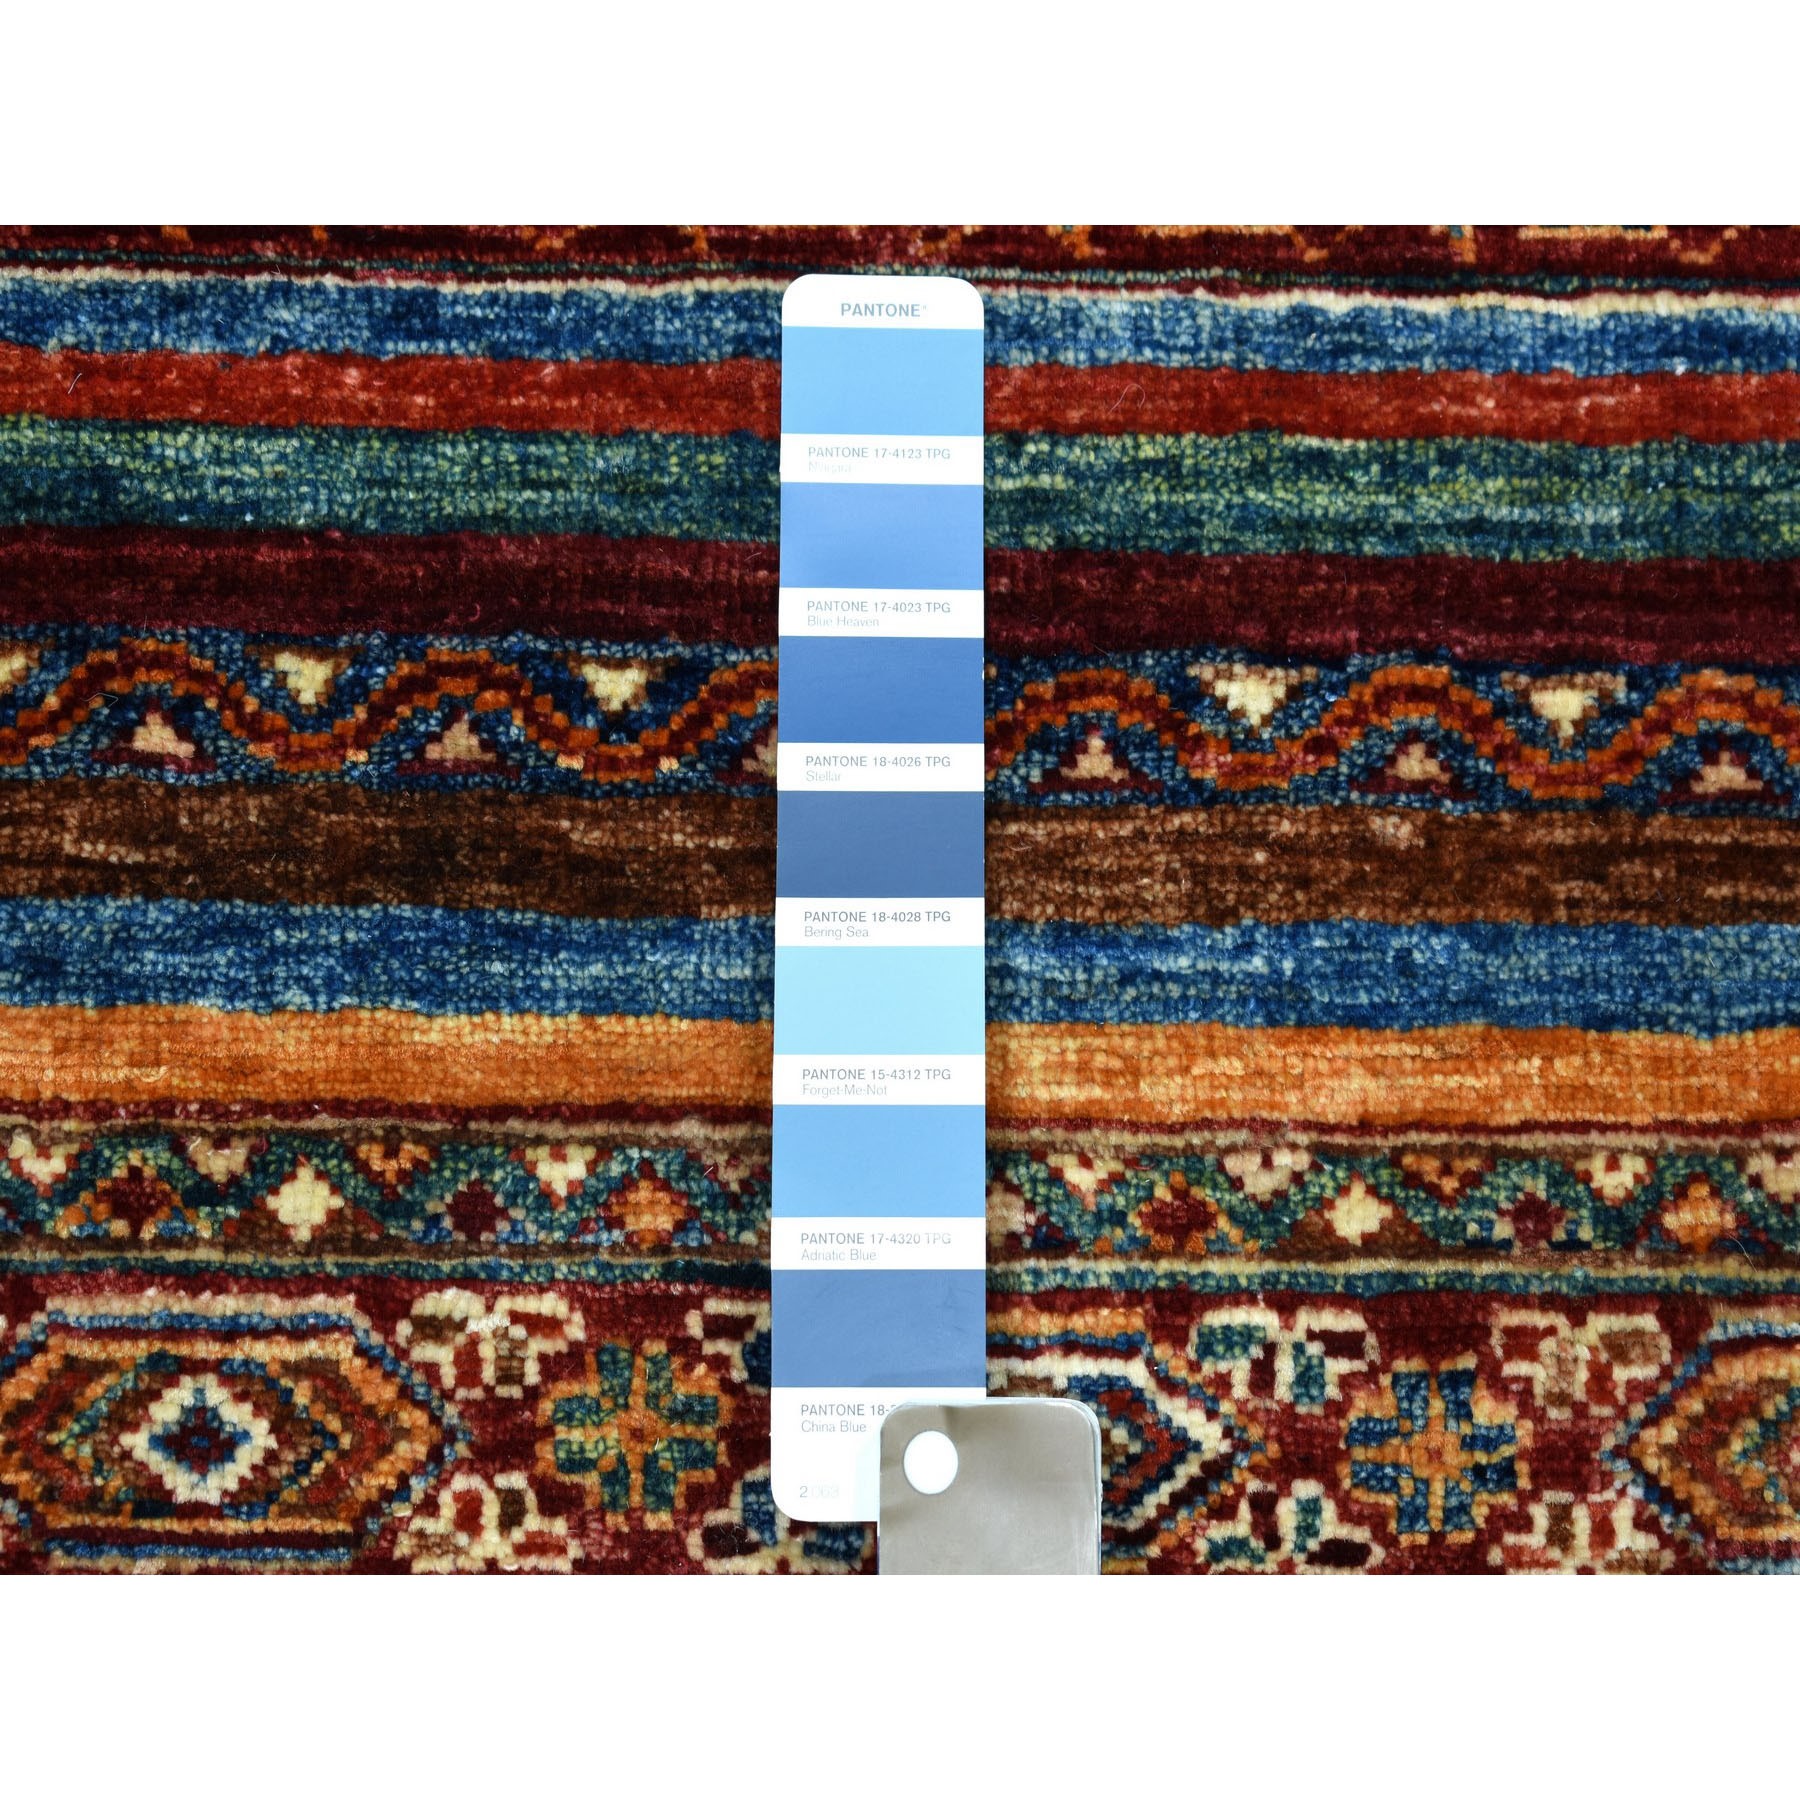 2-8 x4- Khorjin Design Colorful Super Kazak Pure Wool Hand Knotted Oriental Rug 